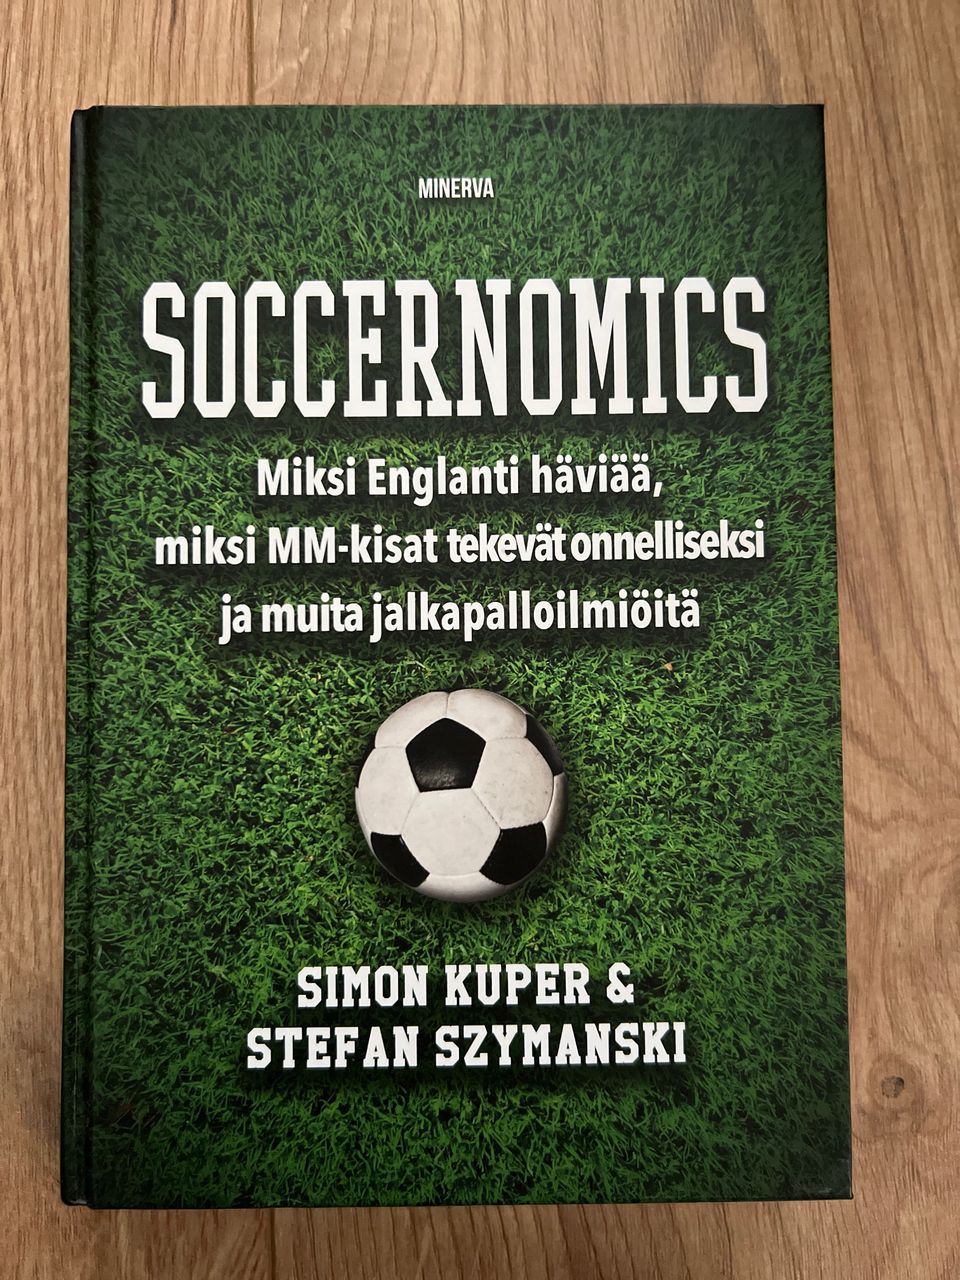 Simon Kuper & Stefan Szymanski - Soccernomics